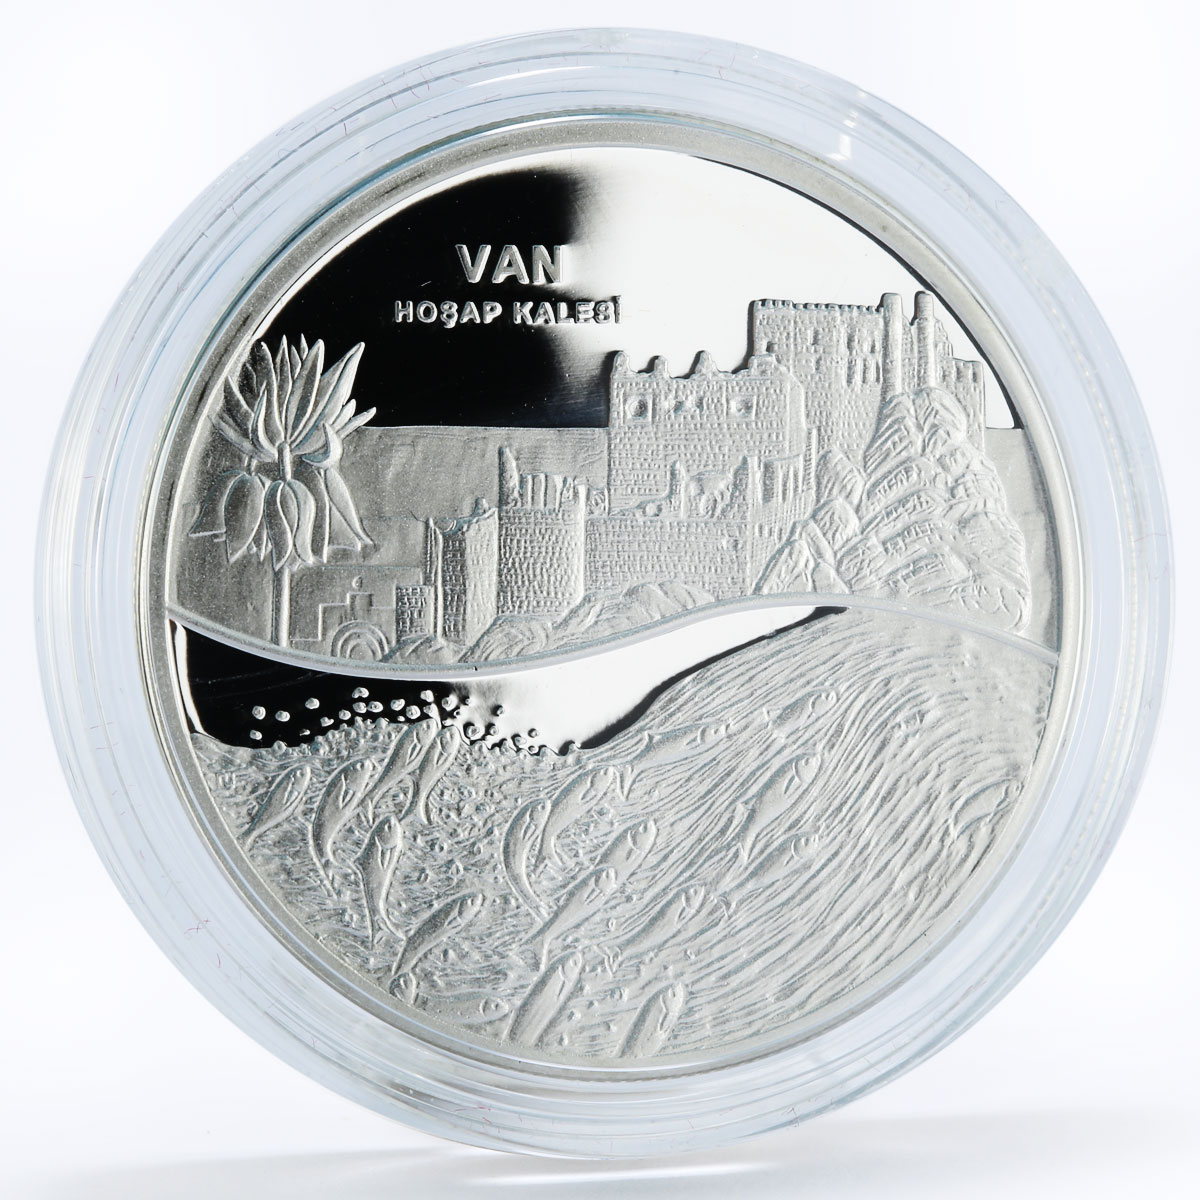 Turkey 20 lira Ishak Pasha Palace Van Culture silver coin 2014